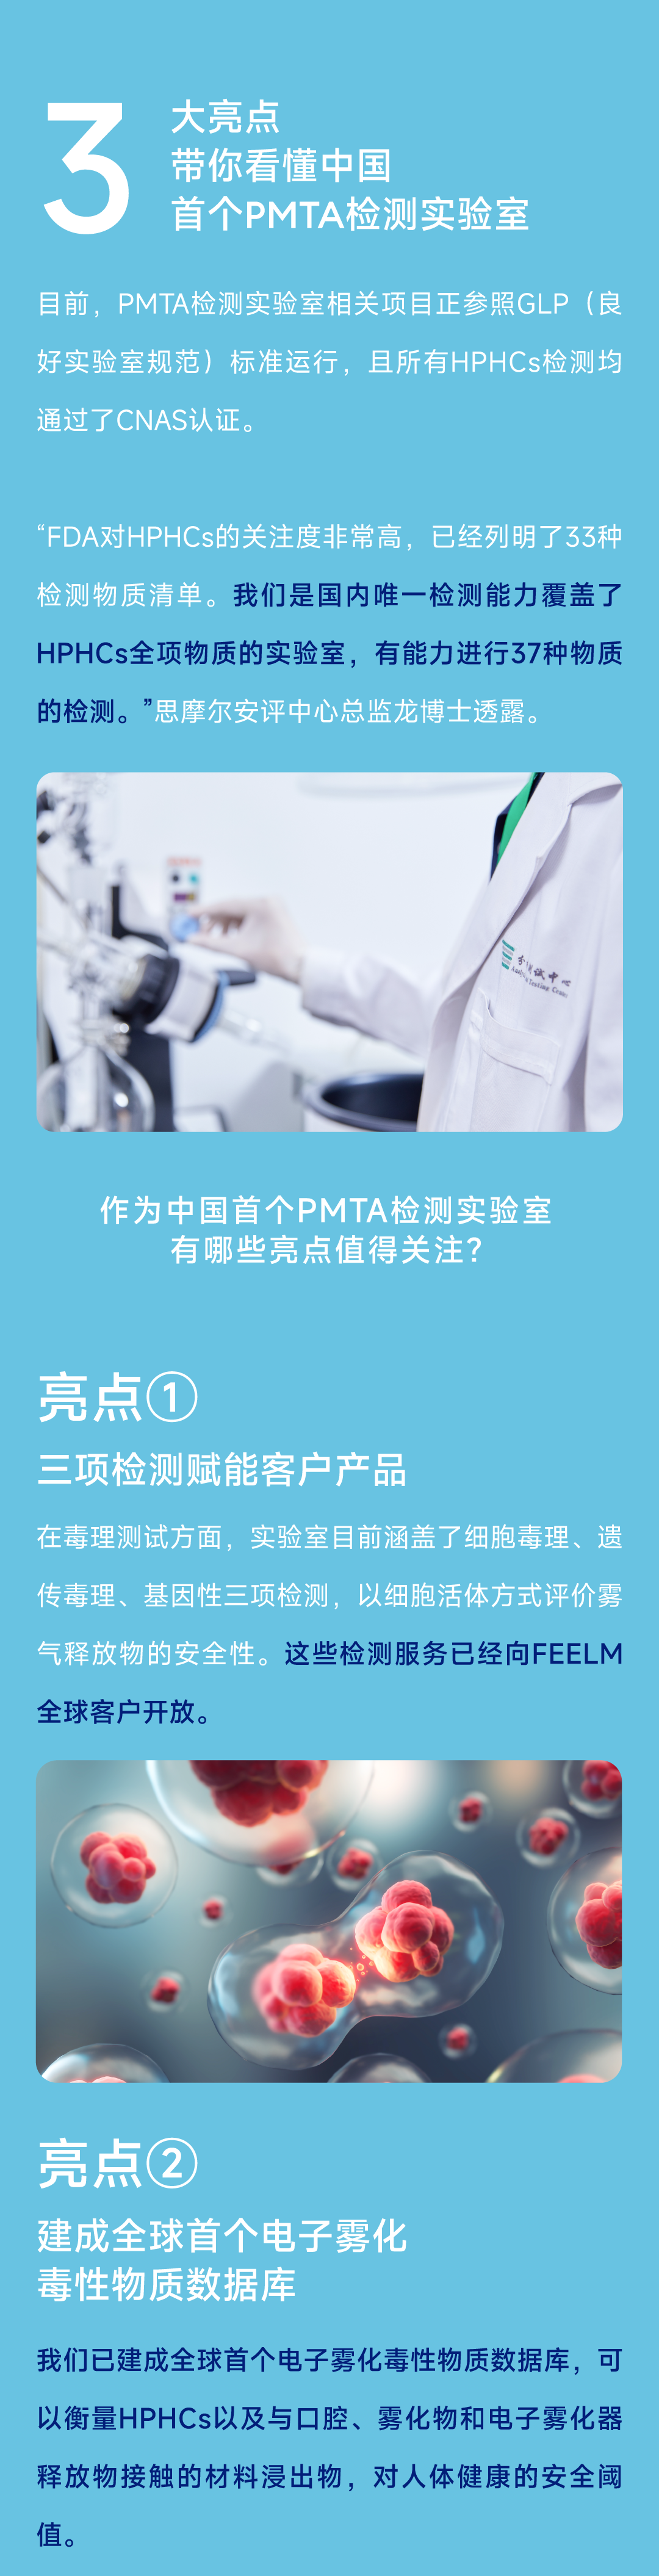 PMTA全项非临床检测实验室